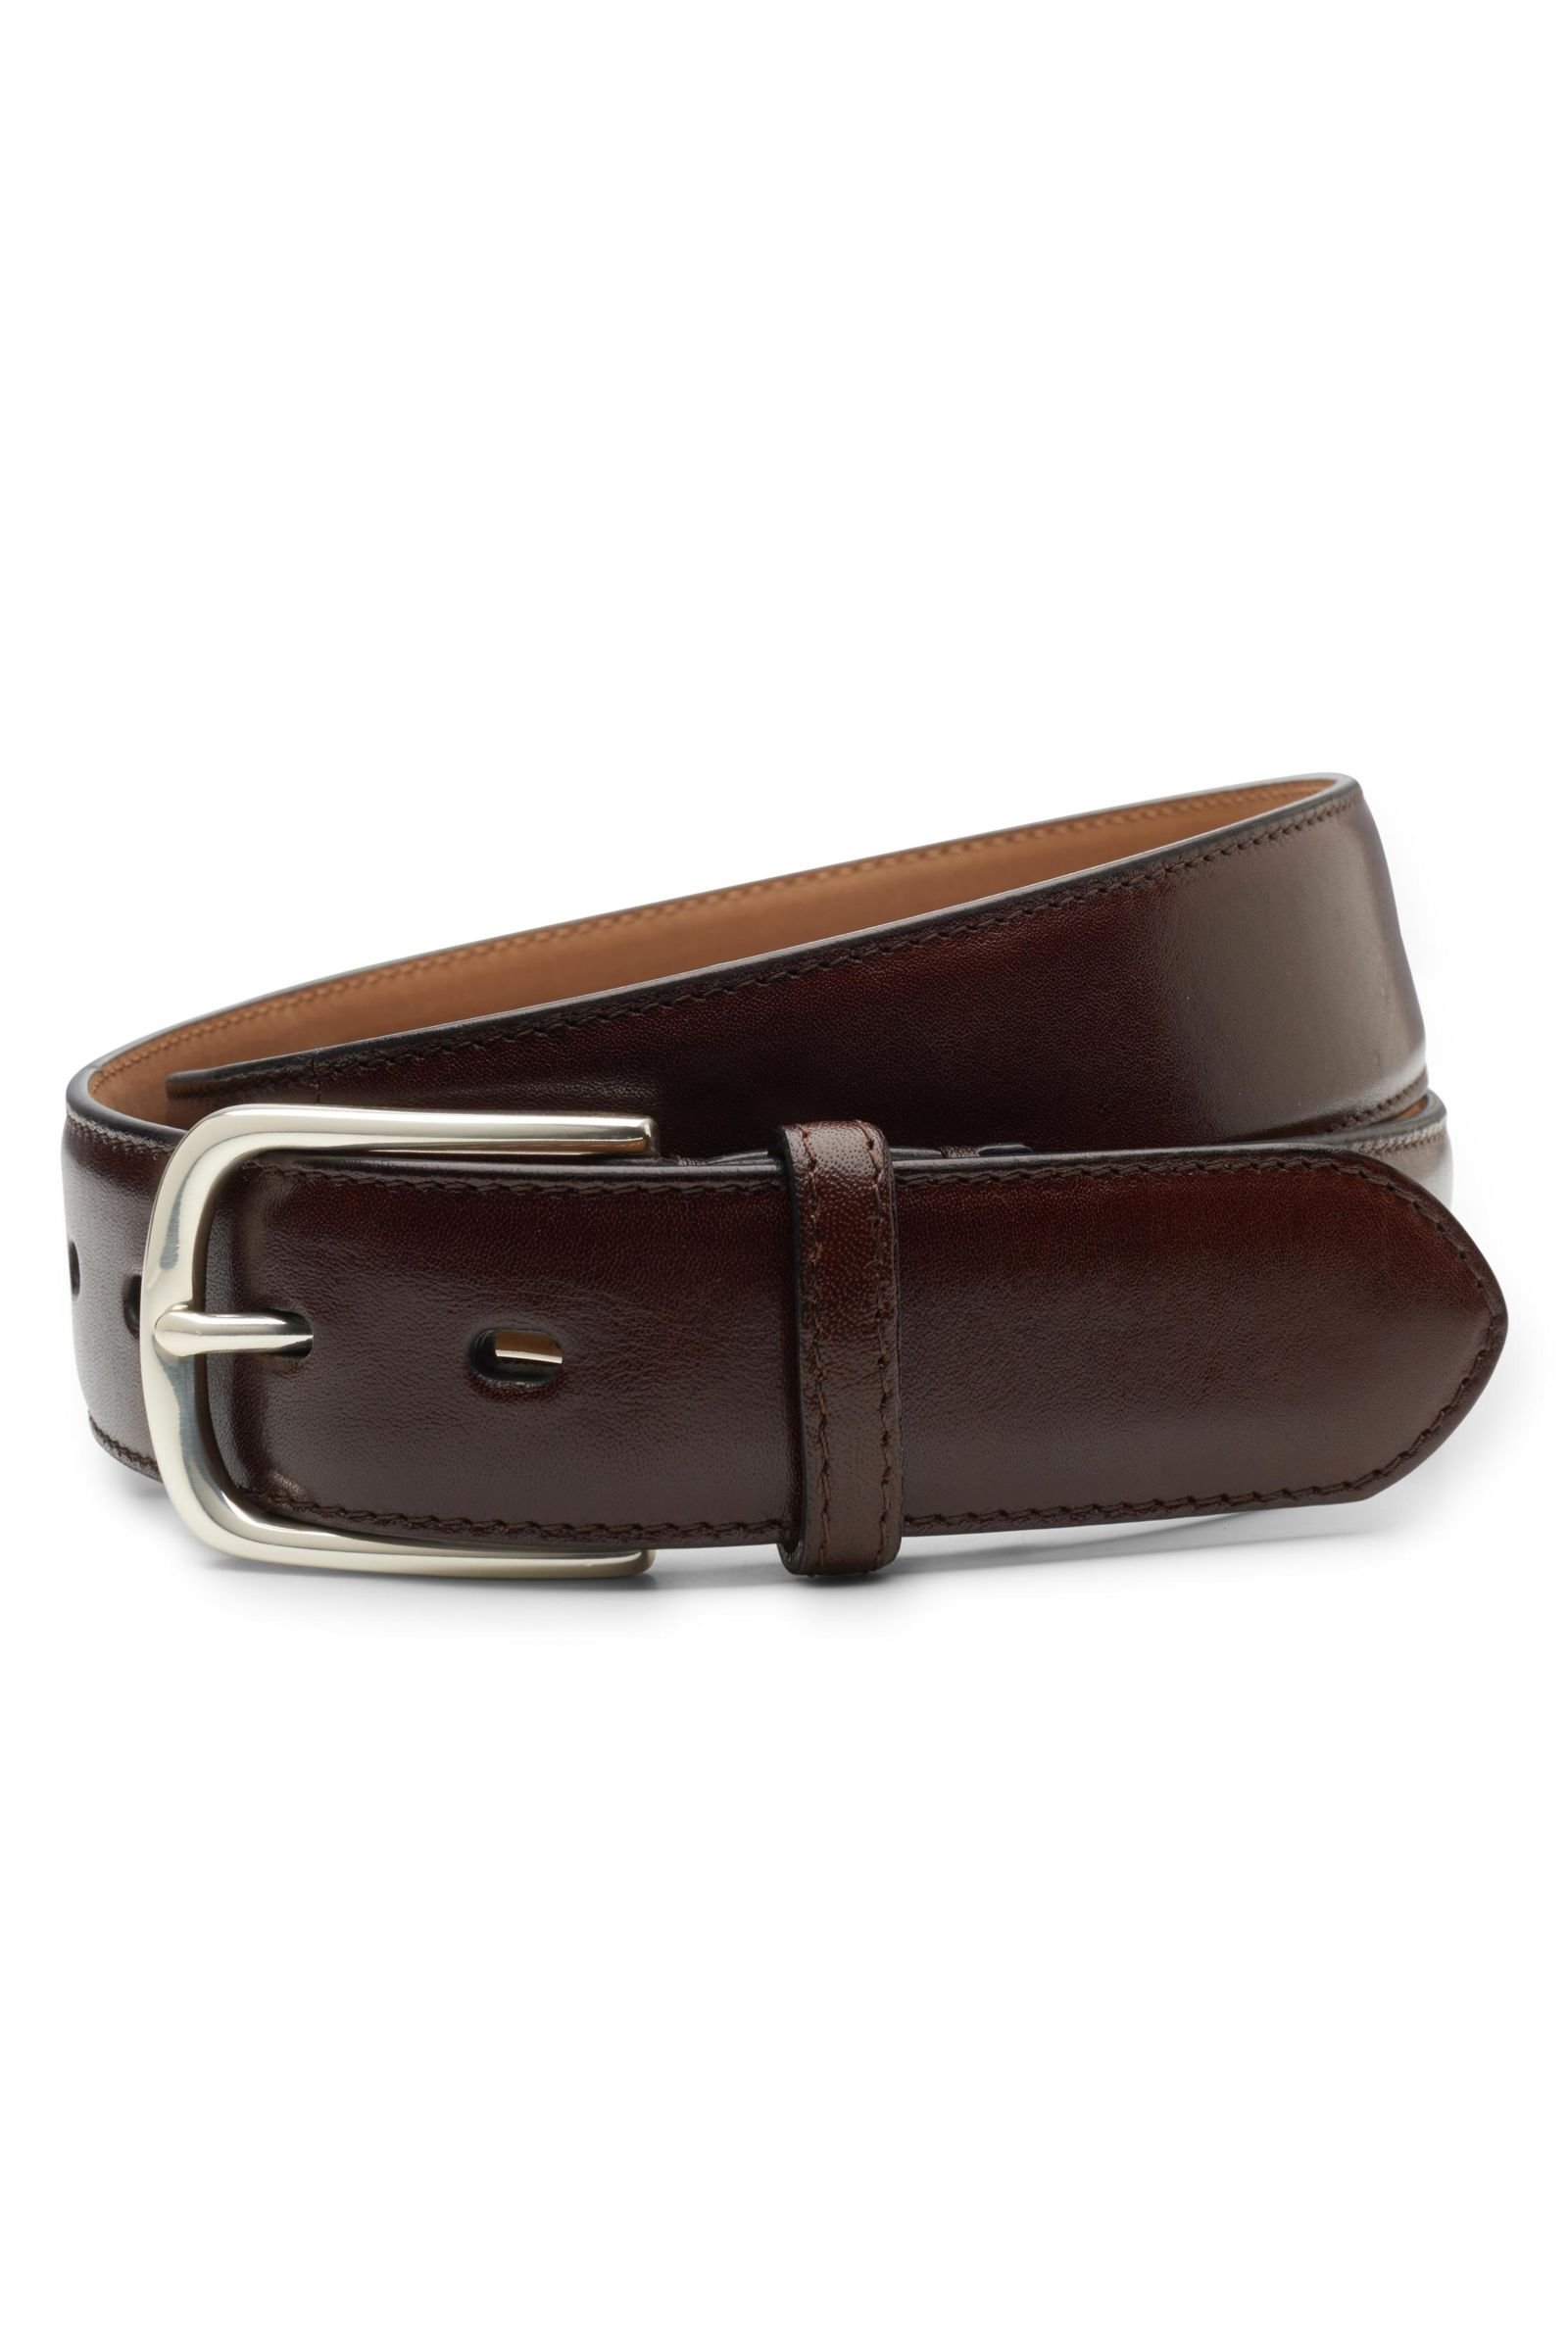 Kangaroo leather belt dark brown